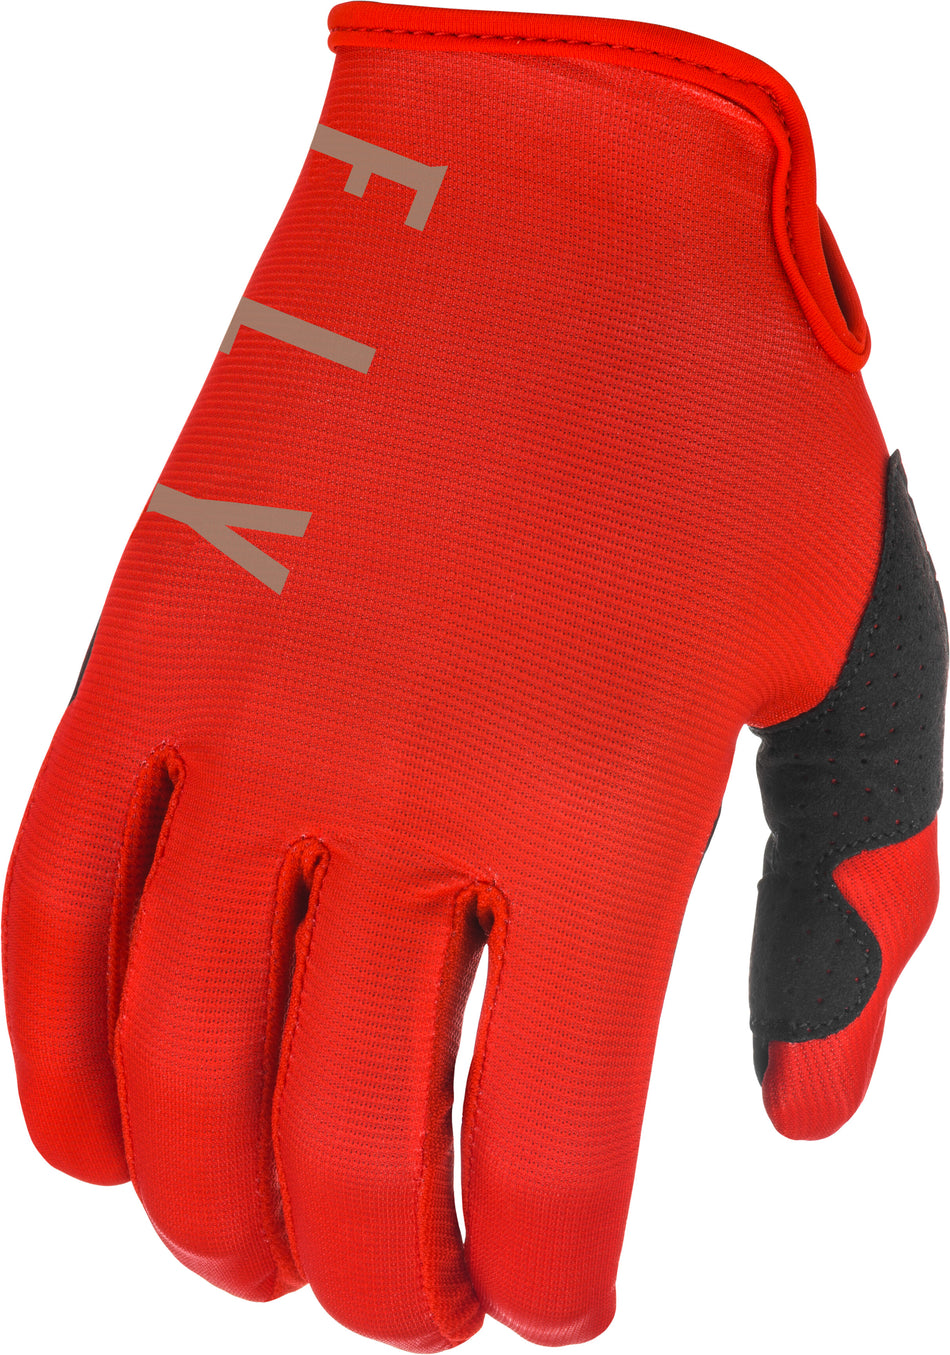 FLY RACING Lite Gloves Red/Khaki Sz 08 374-71208